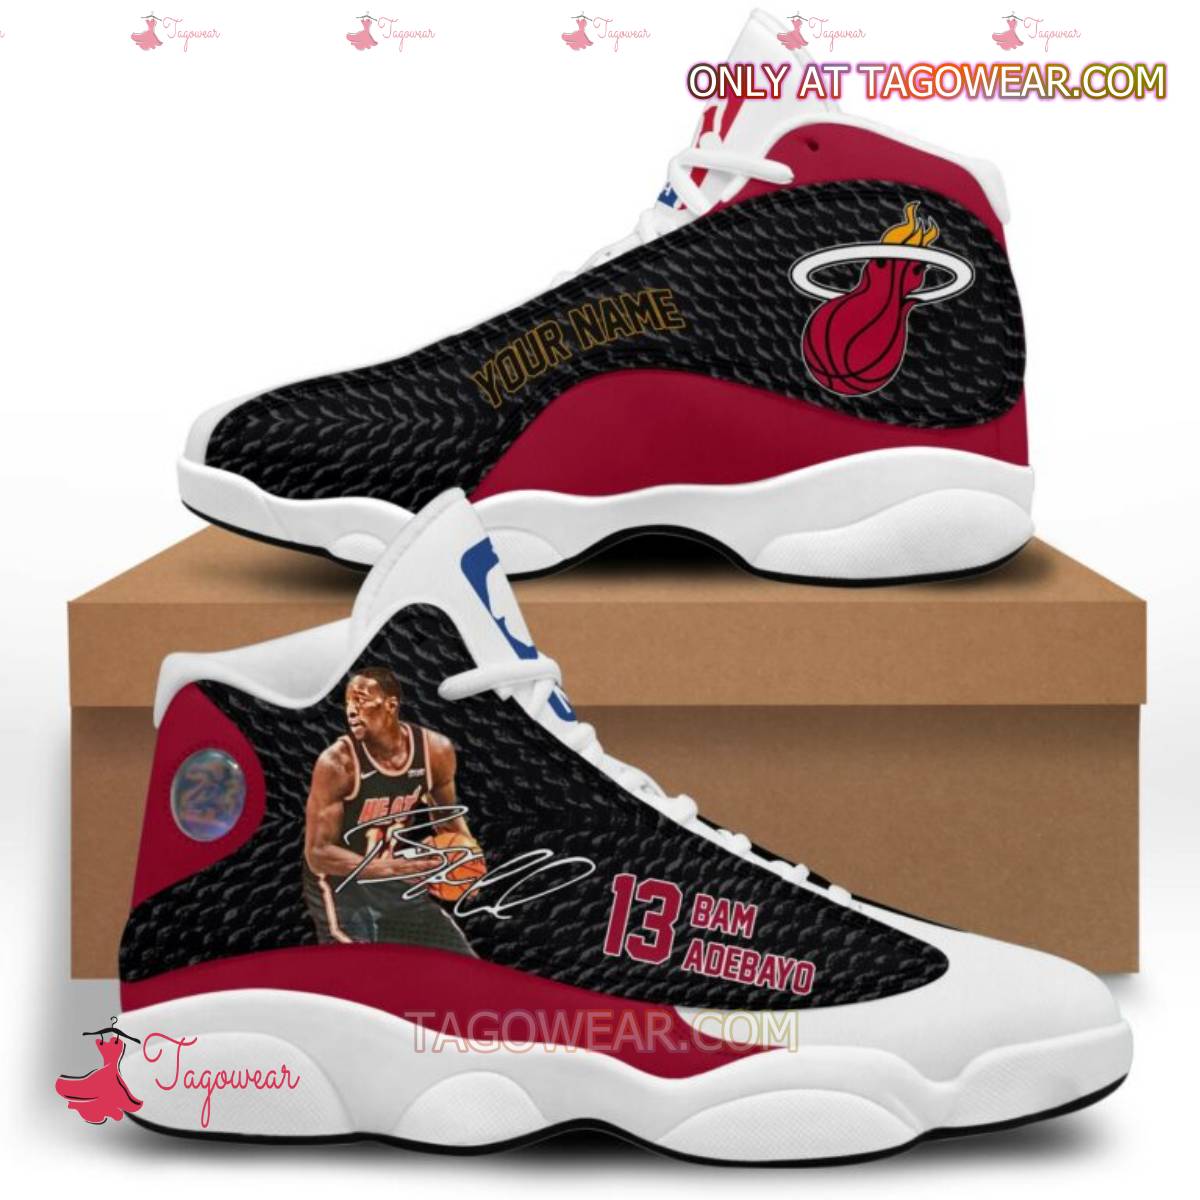 Nba Bam Adebayo Miami Heat Personalized Air Jordan 13 Shoes